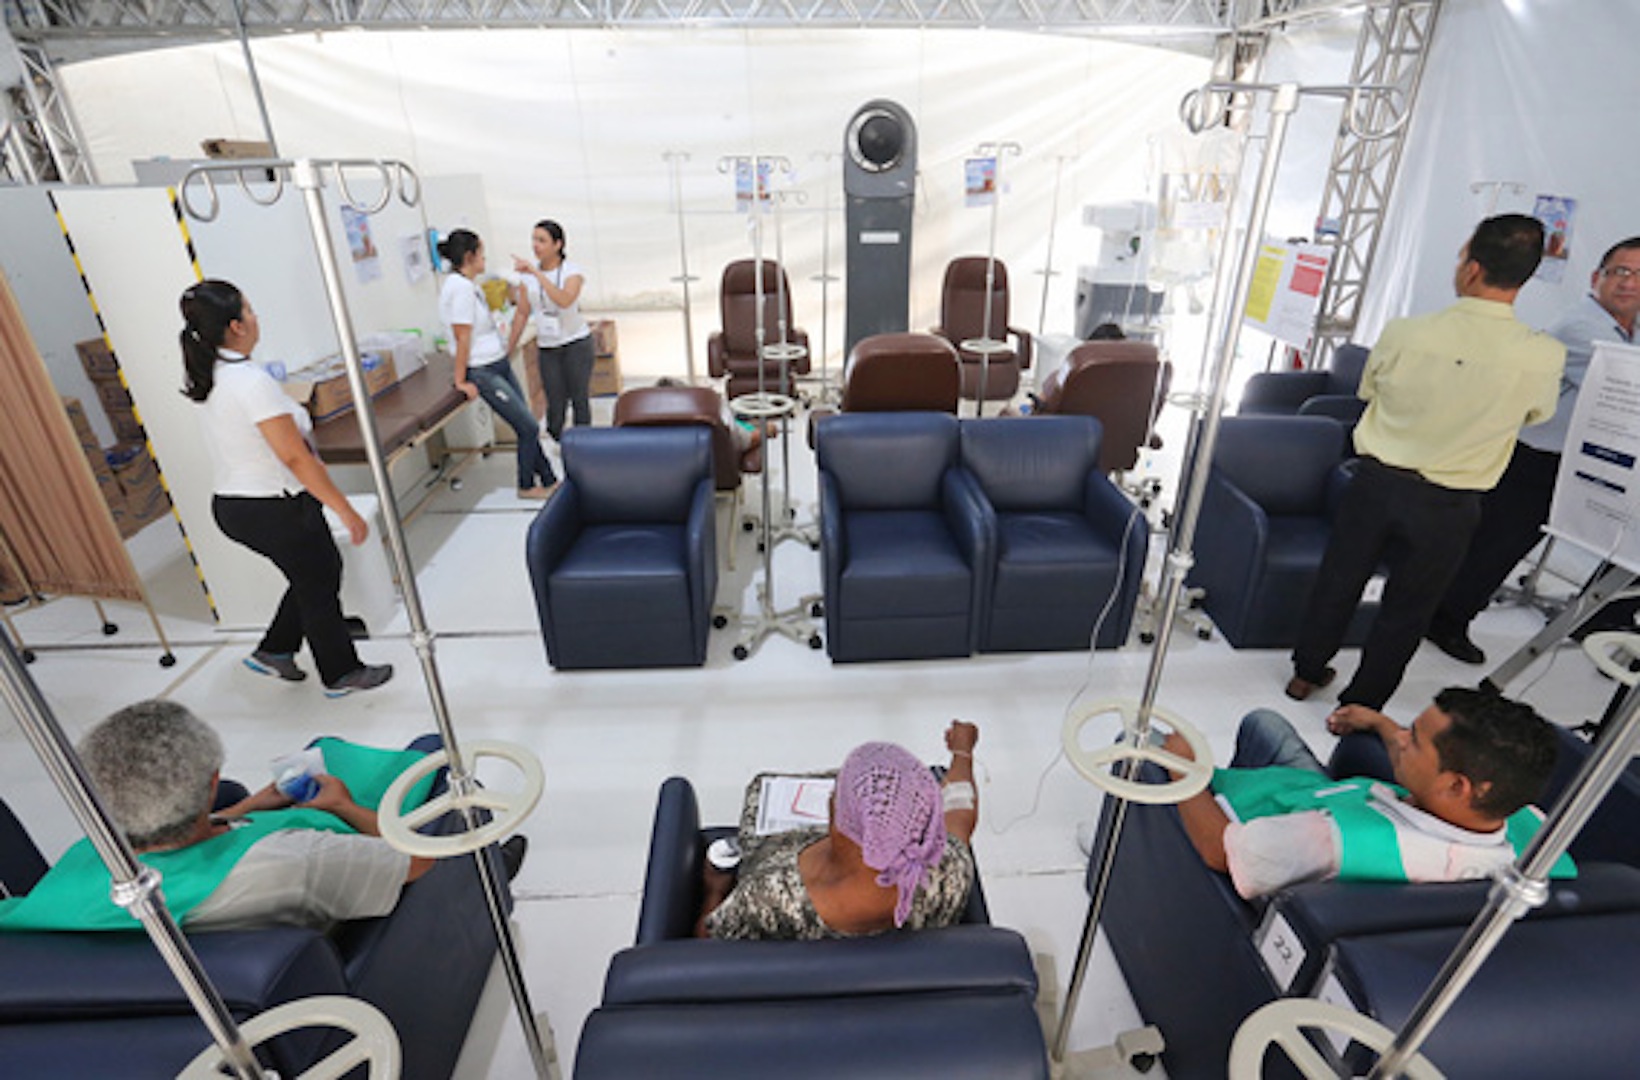 São Paulo City Offers 20-Minute Dengue Virus Detection Test